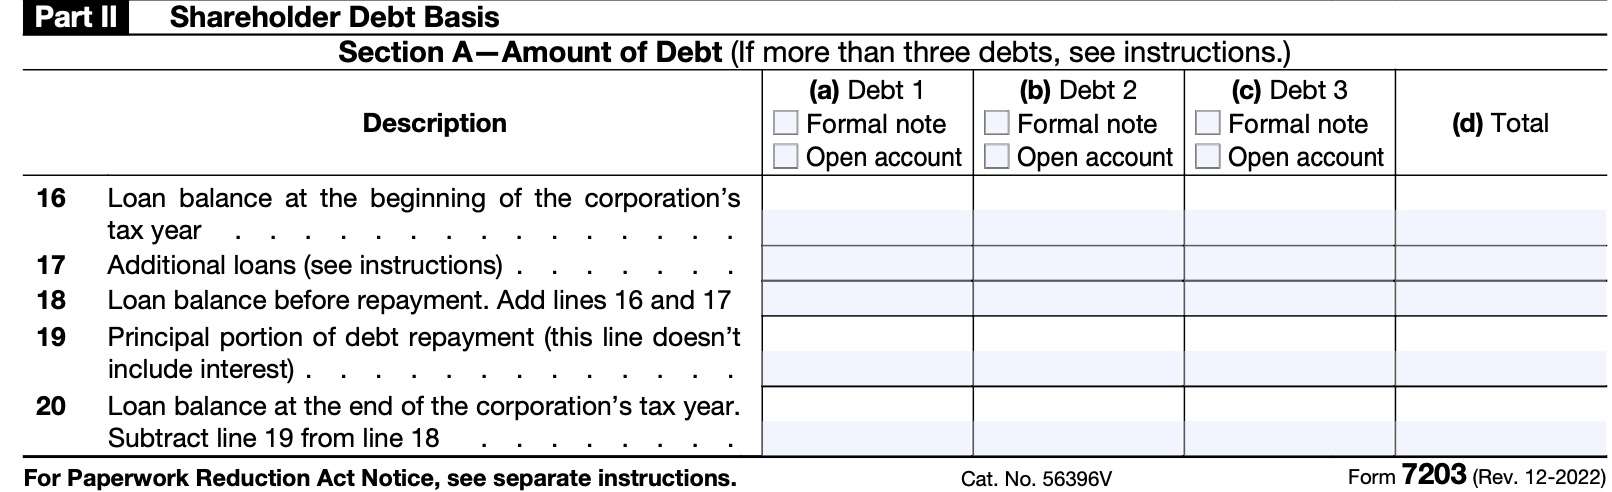 irs form 7203 part II, shareholder debt basis, section A-amount of debt